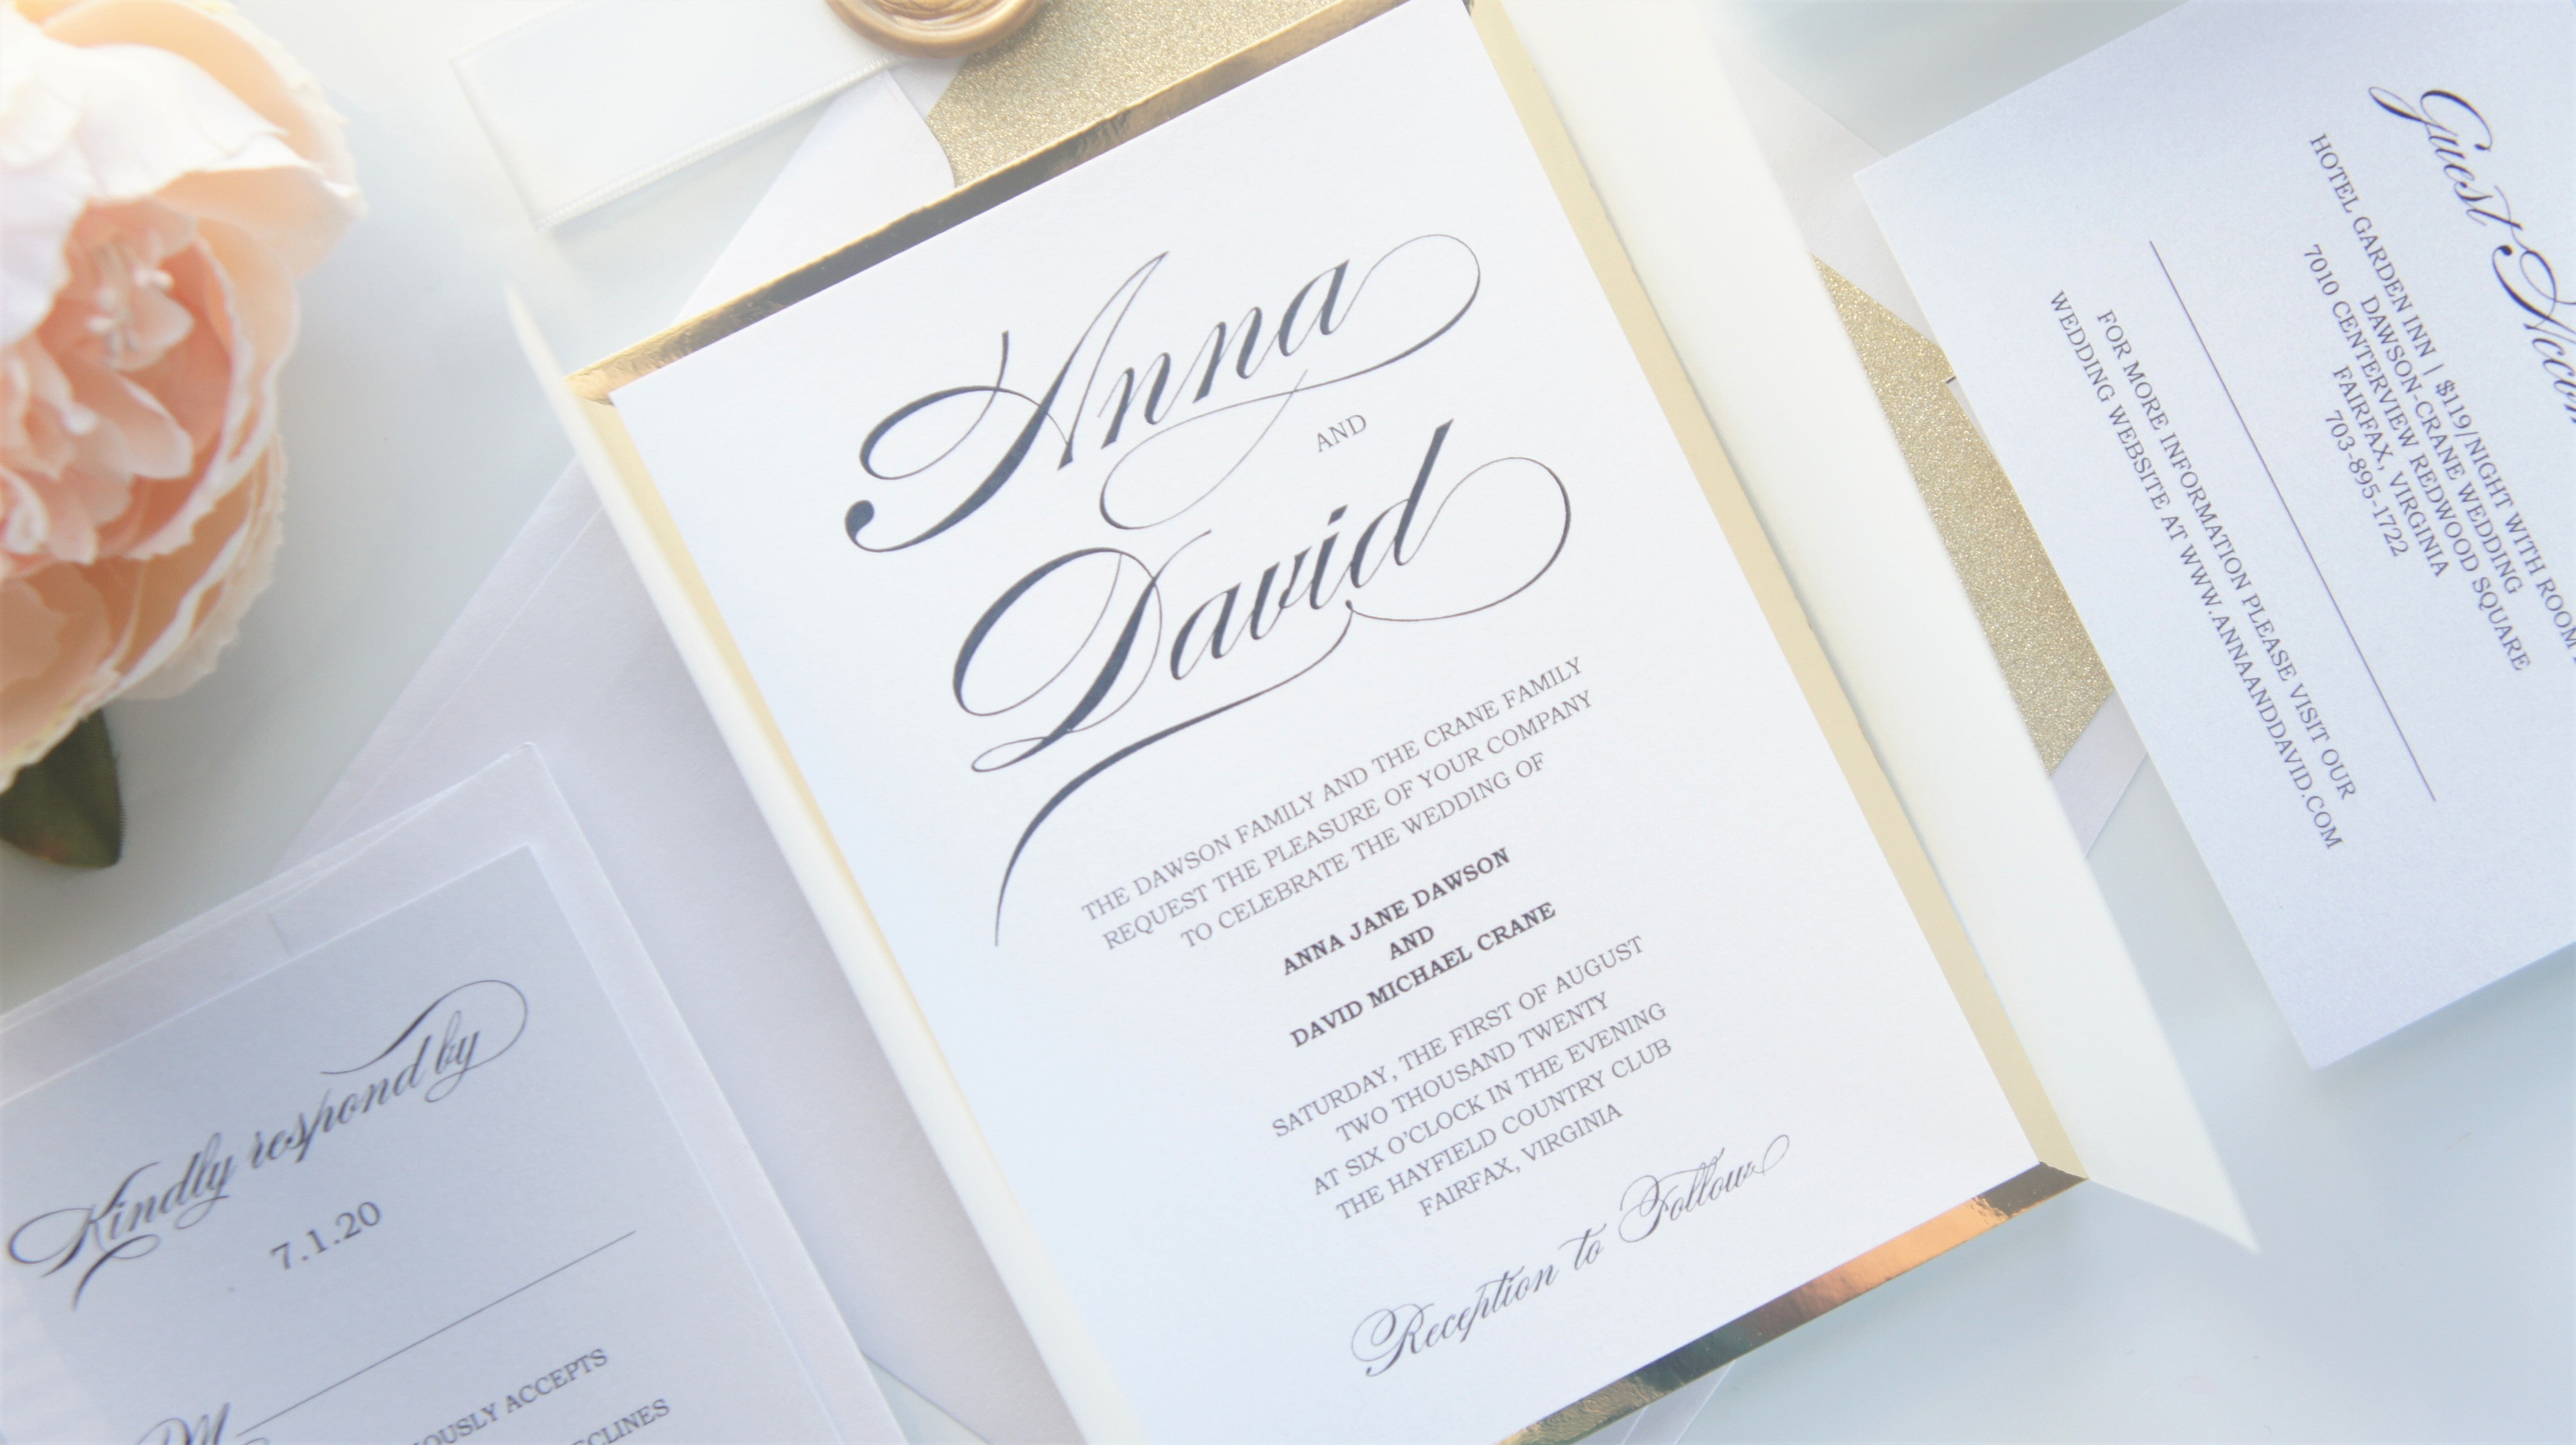 Burgundy and Gold Vellum and Wax Seal Wedding Invitation - SAMPL